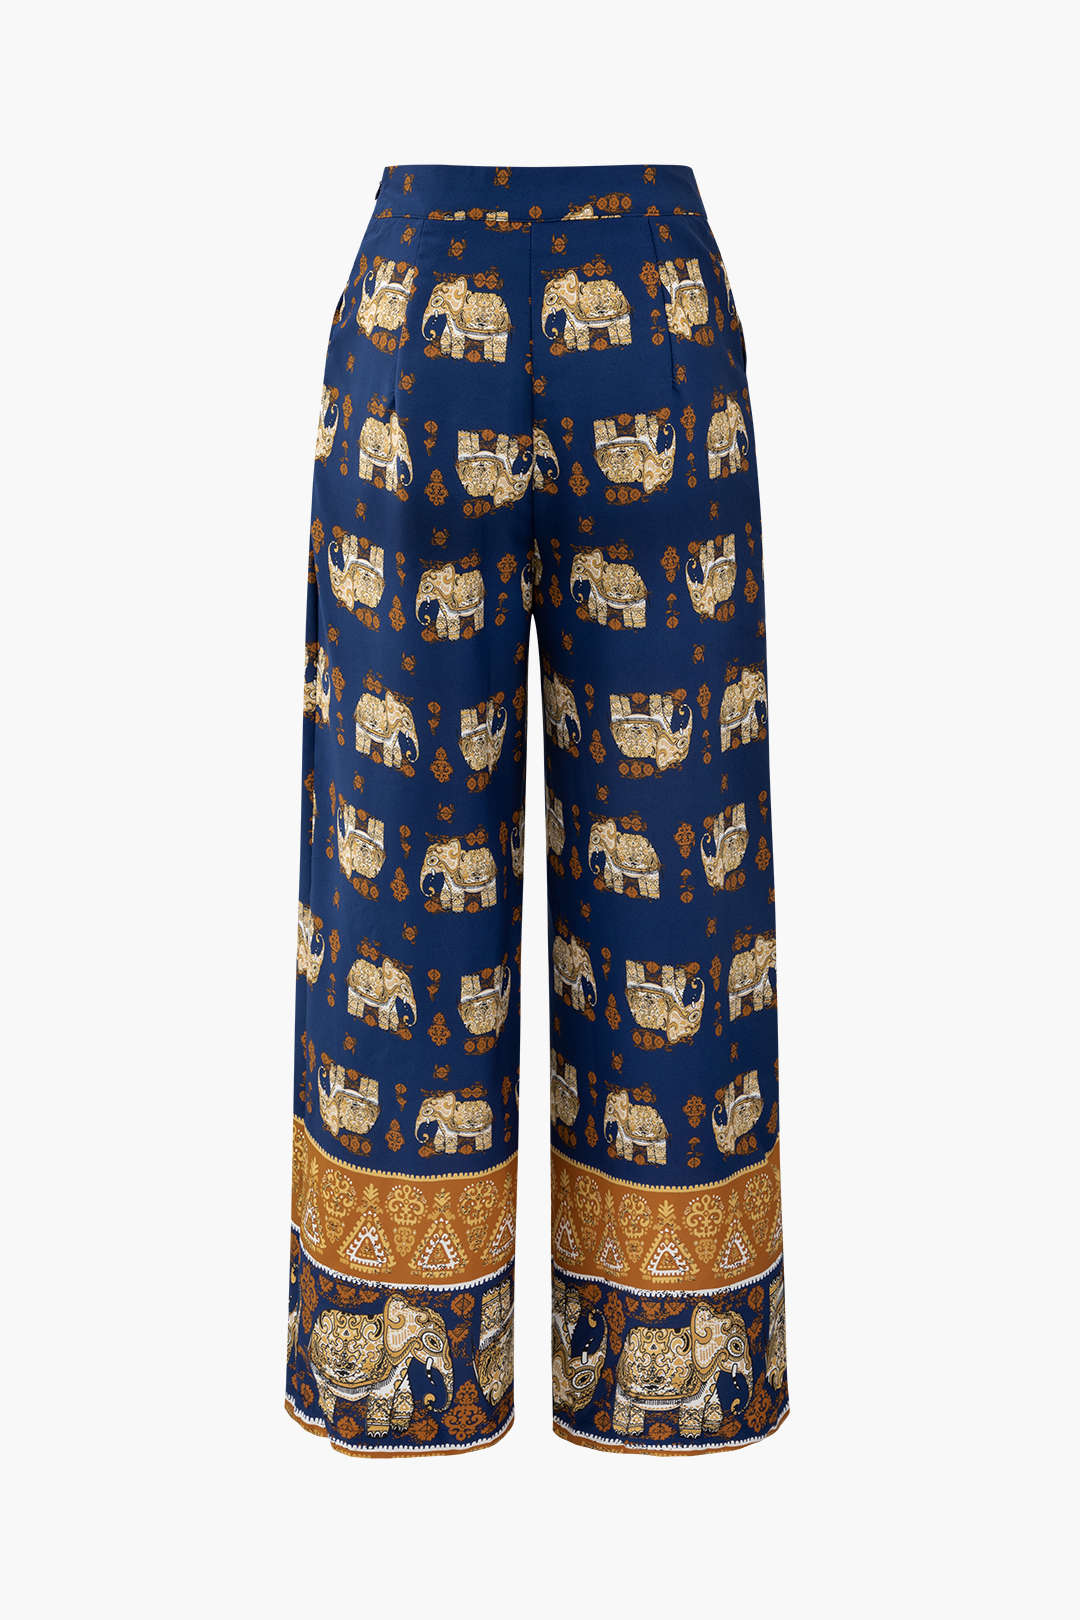 Elephant Print Wrap Tie Cami Top And Pants Set